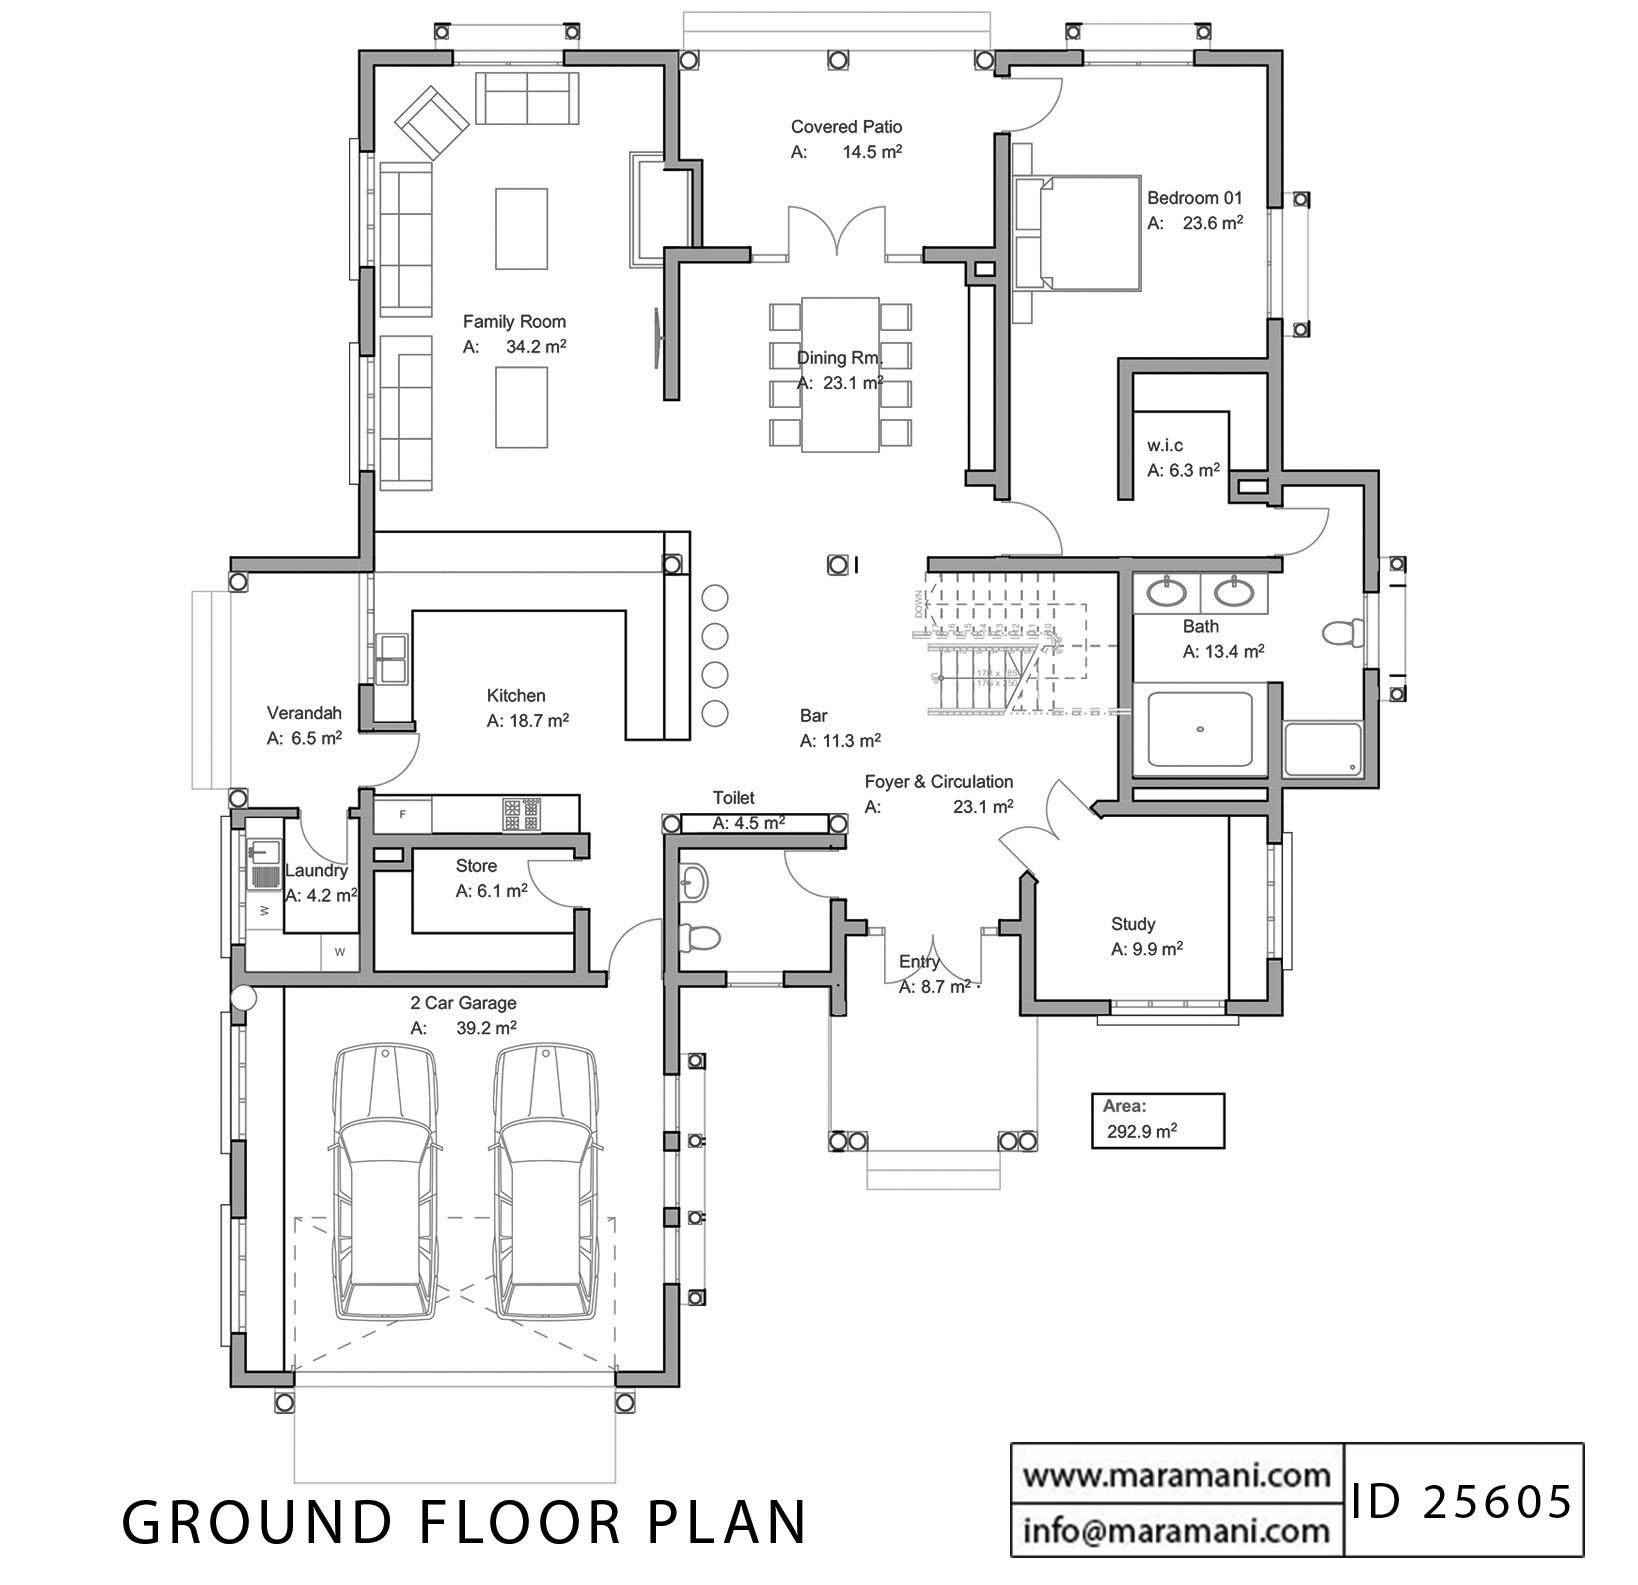 5 Bedroom House Plan - ID 25605